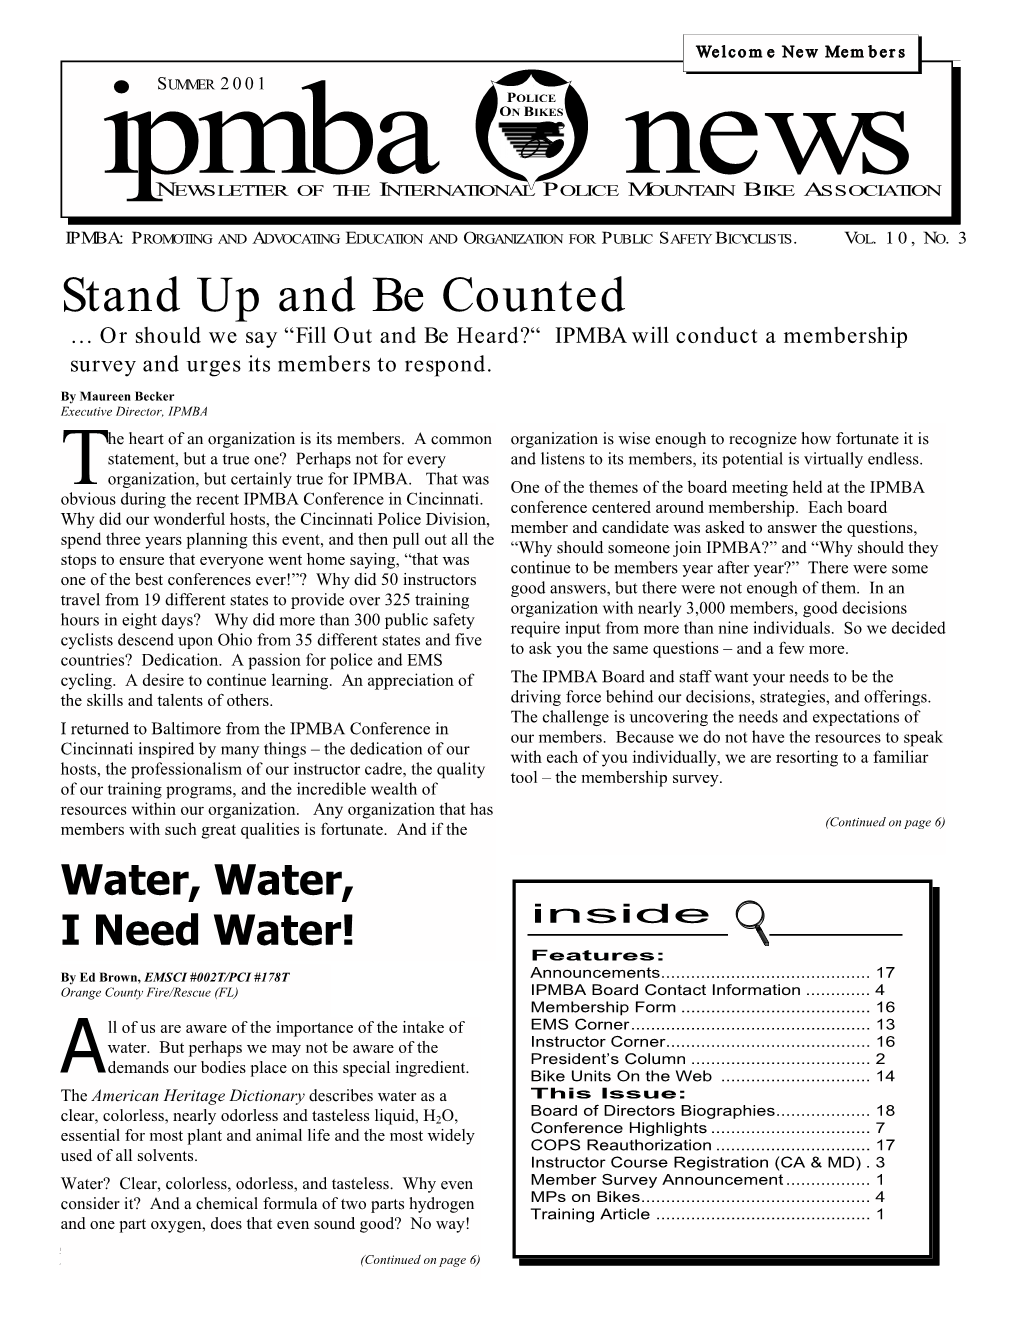 IPMBA News Vol. 10 No. 3 Summer 2001